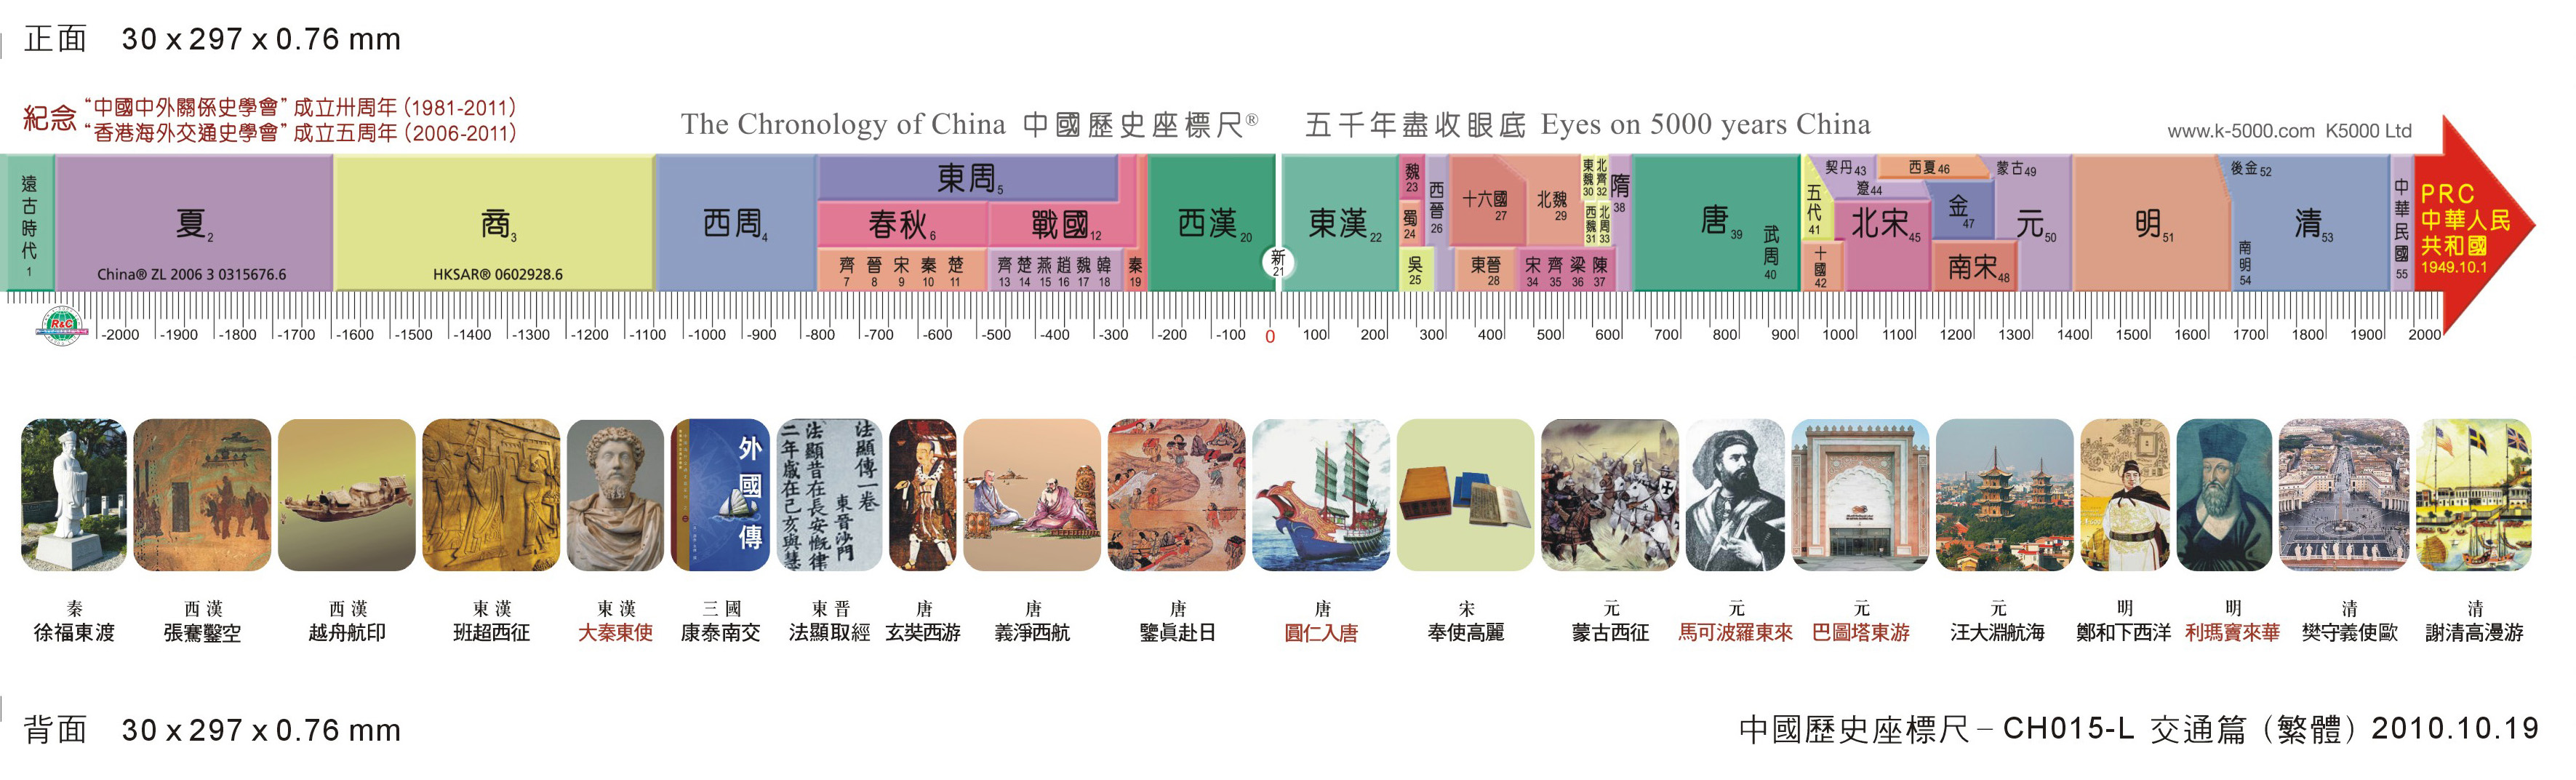 the_chronology_of_china